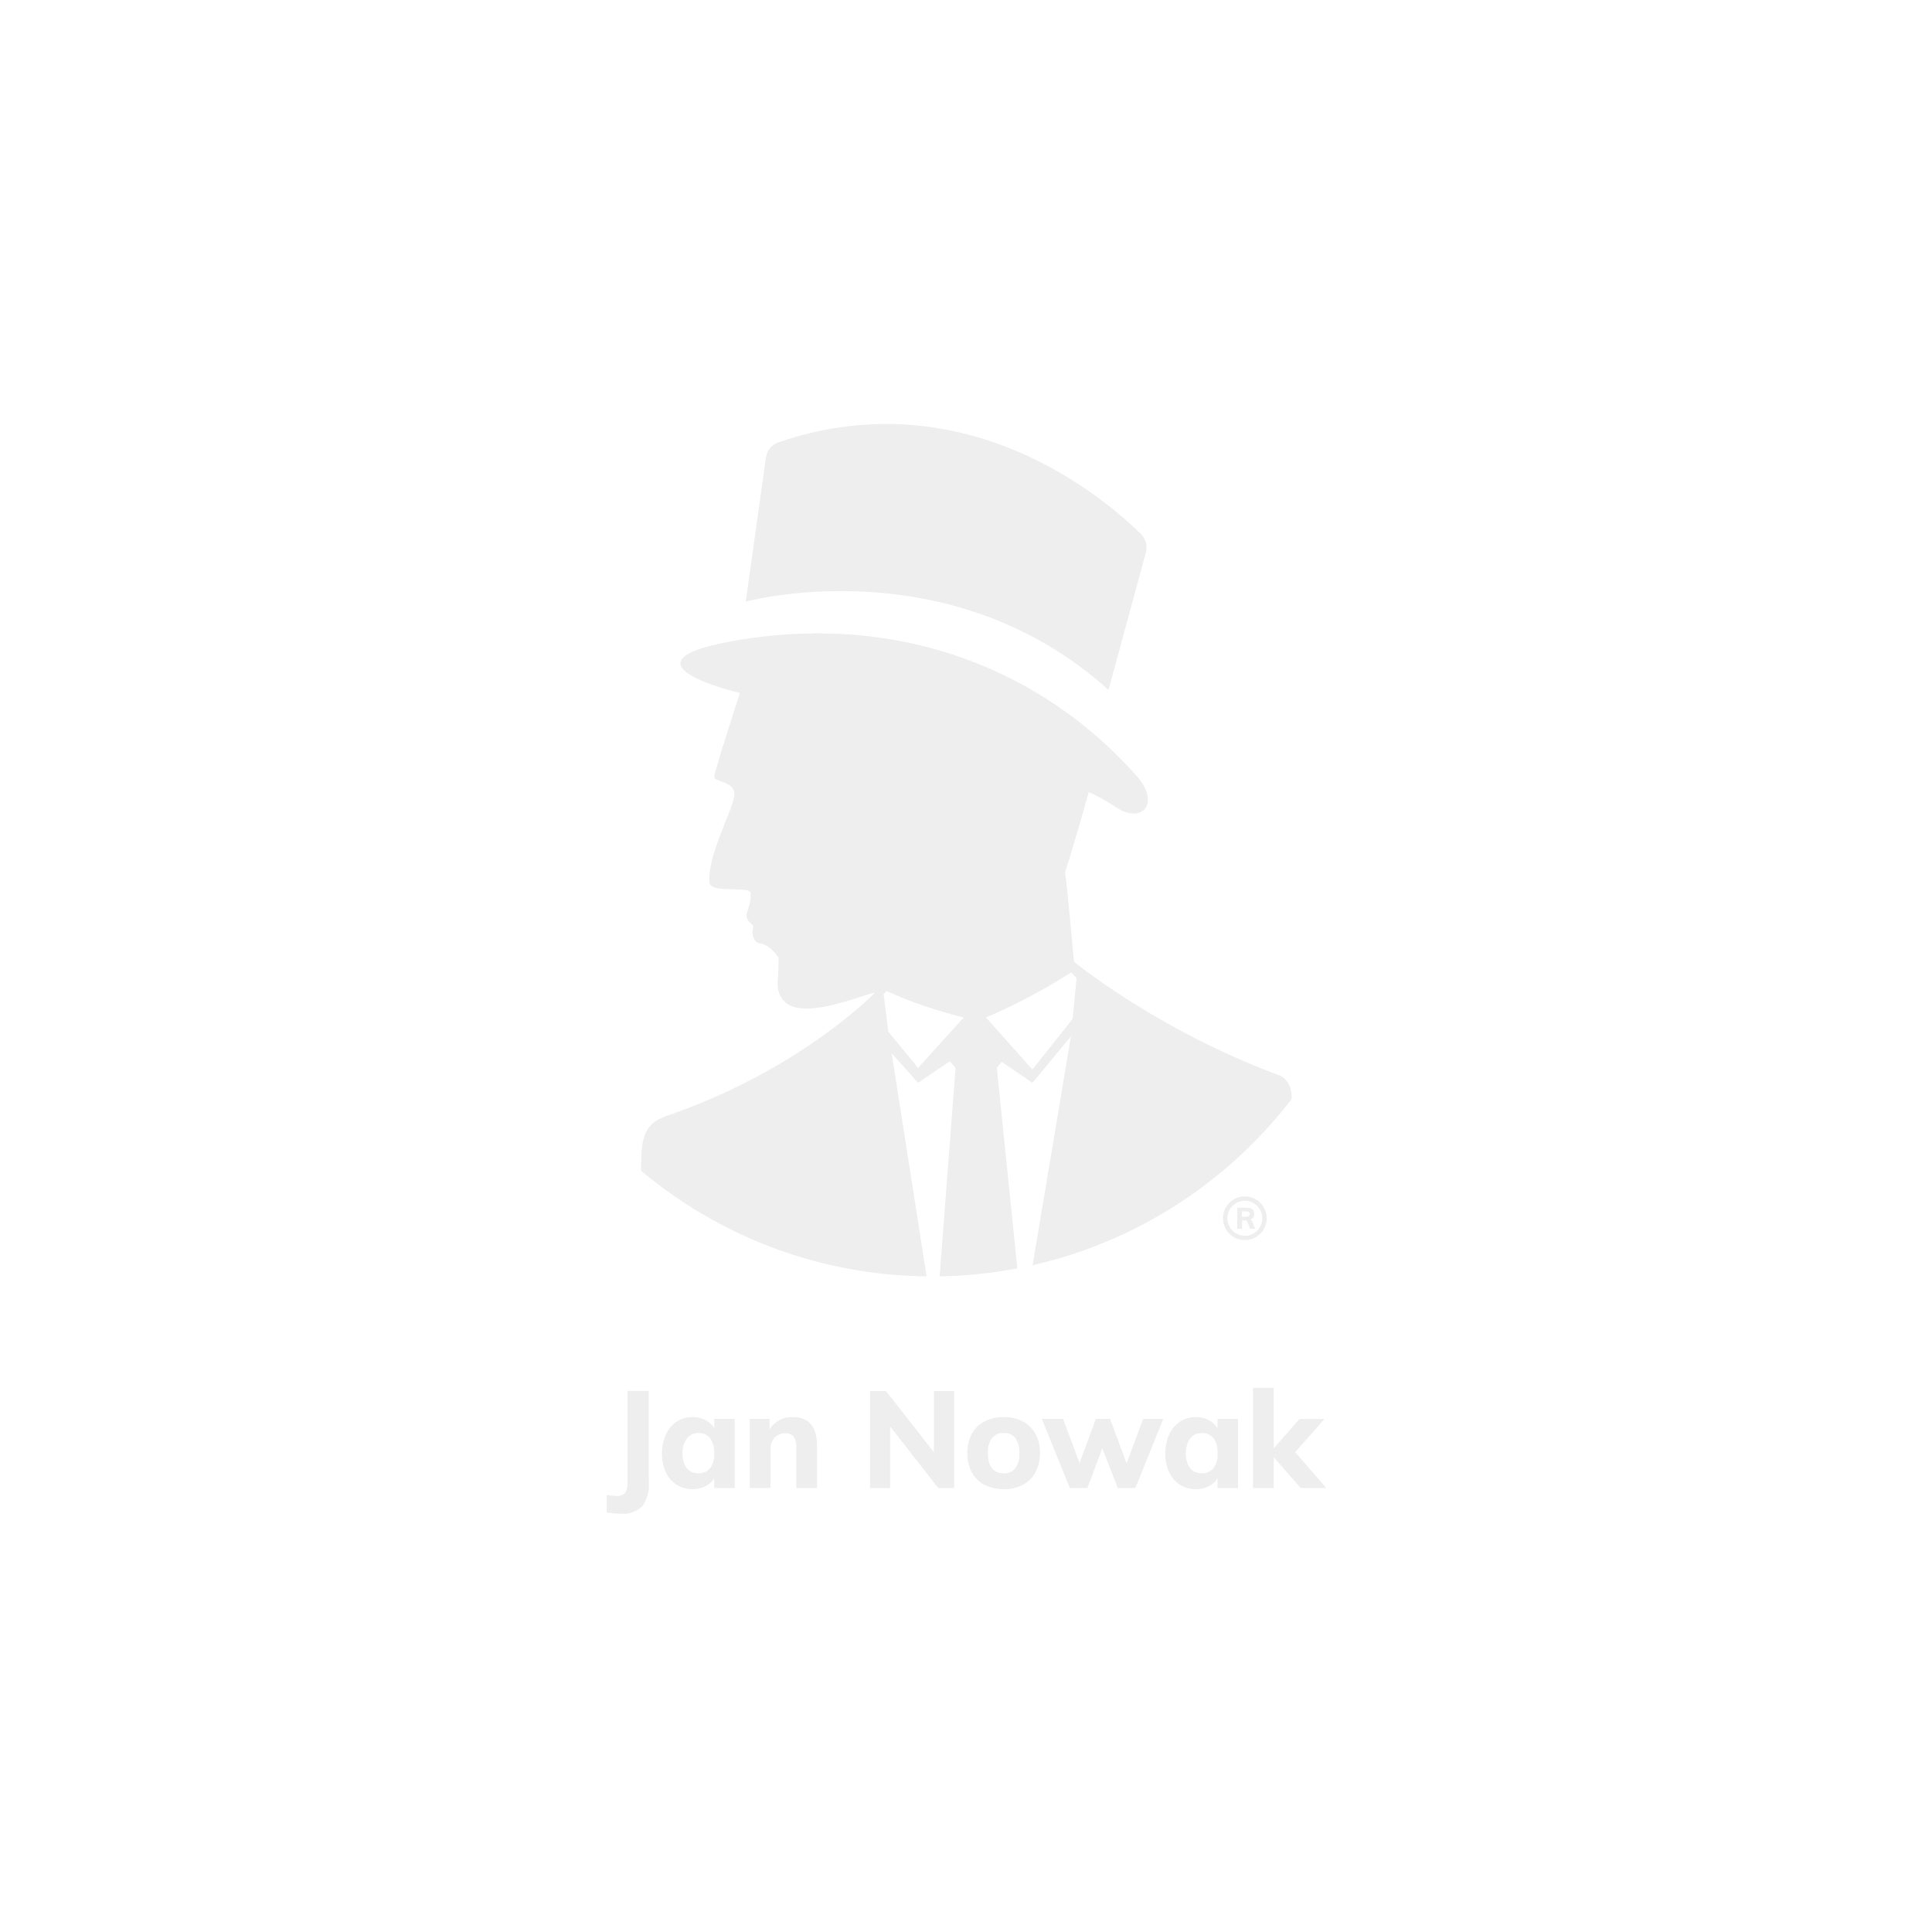 JAN NOWAK model MAGDA 900x1850x400 biurowa dzielona szafa metalowa na akta: szara